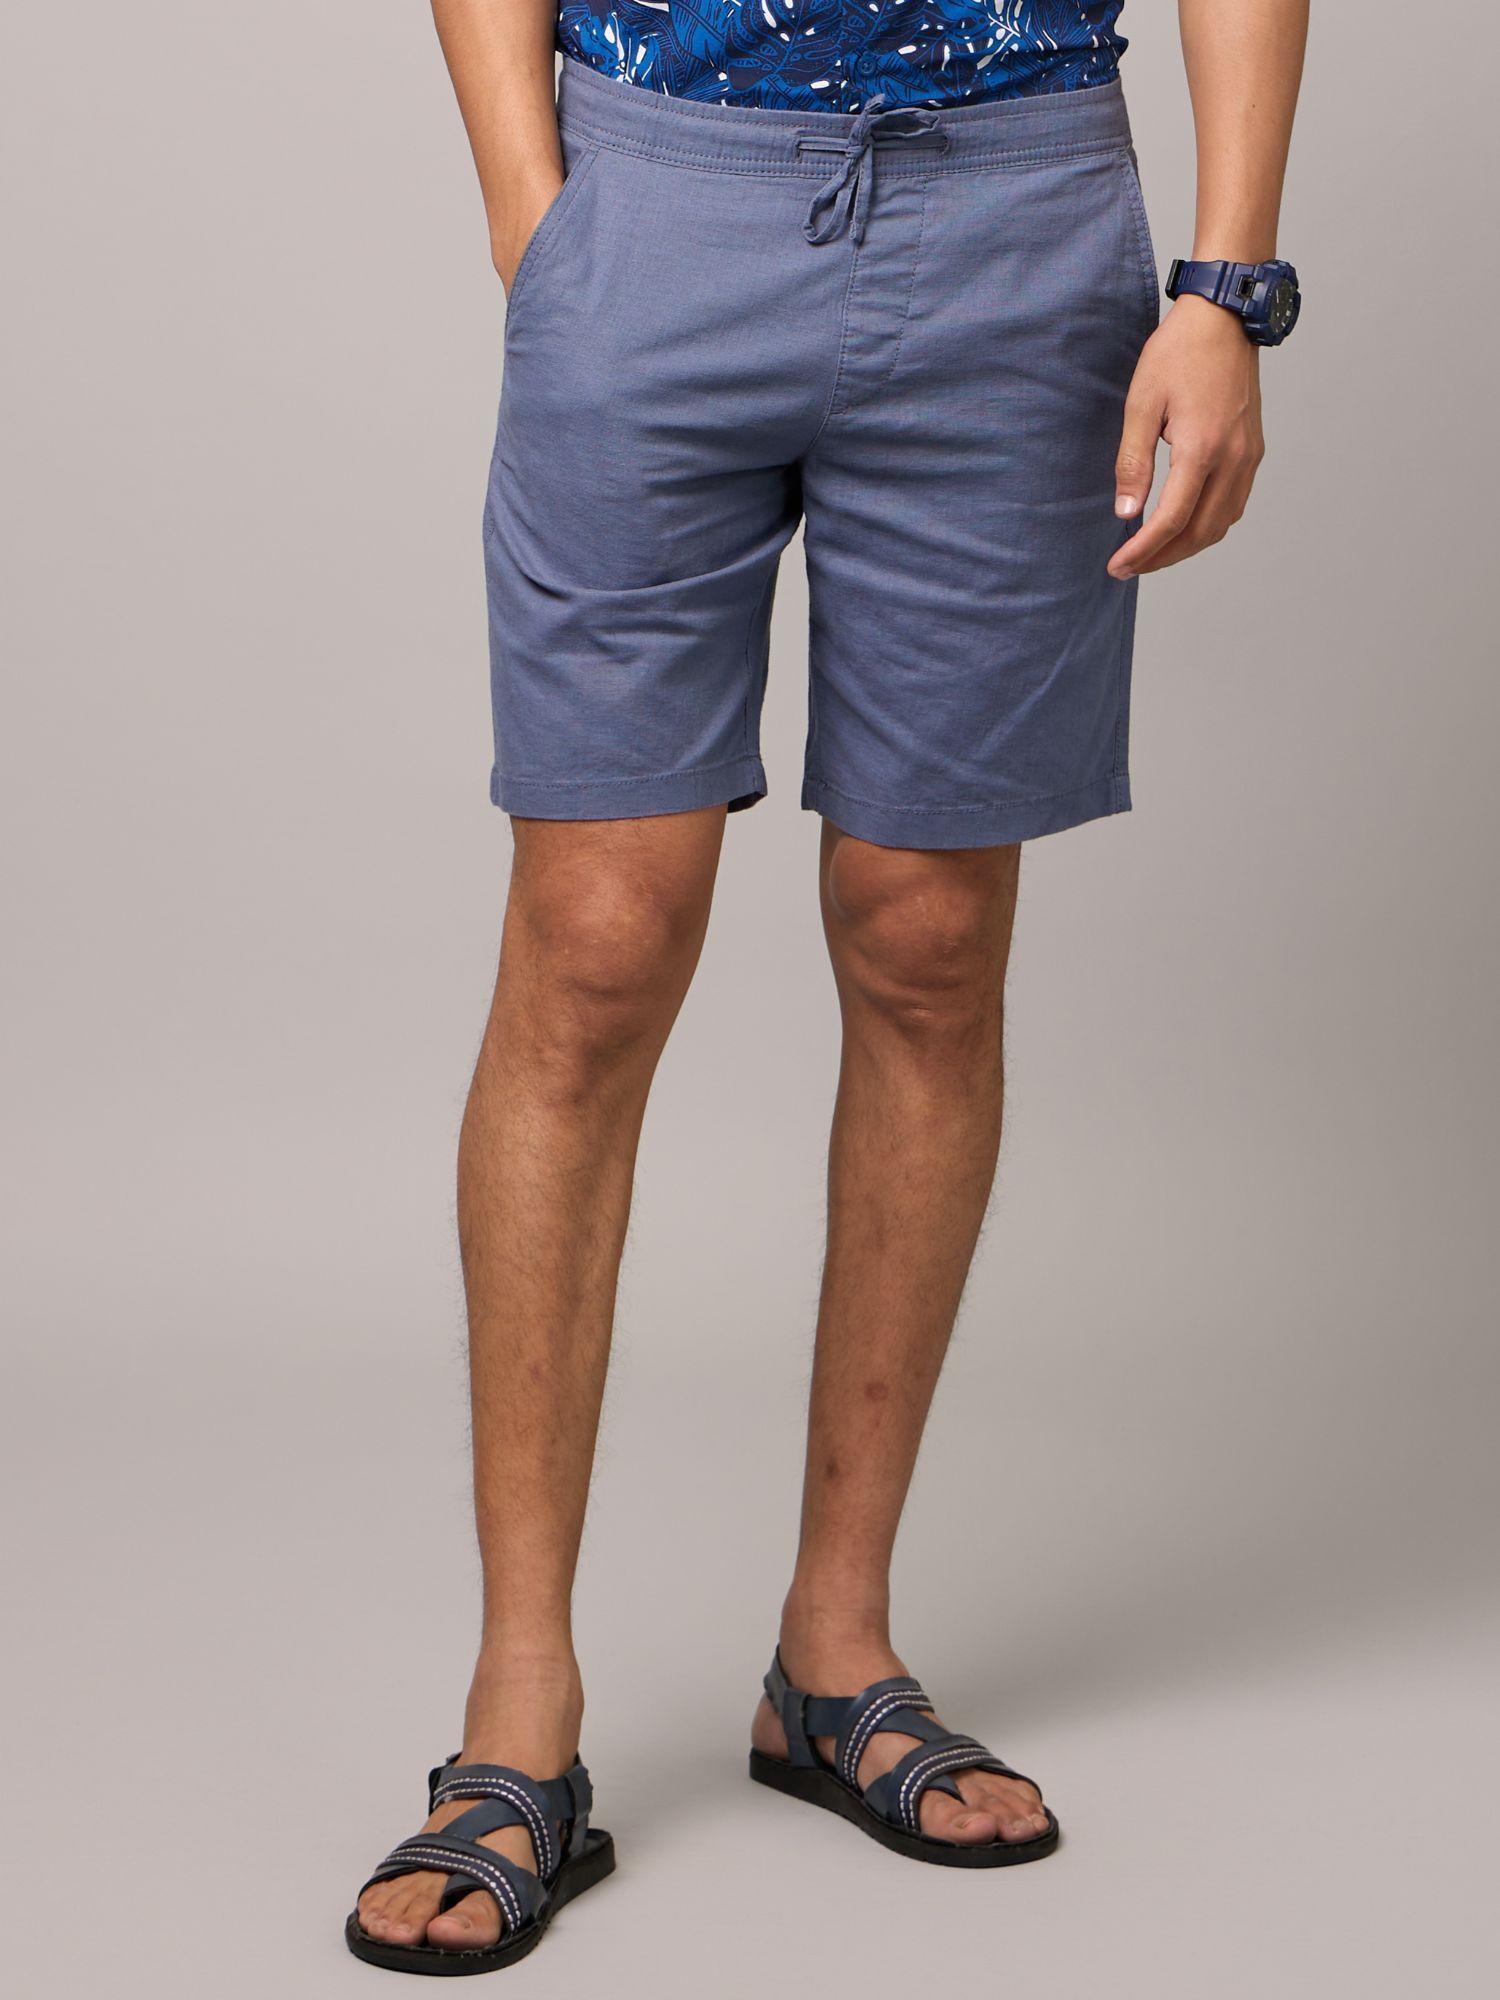 mens blue solid shorts